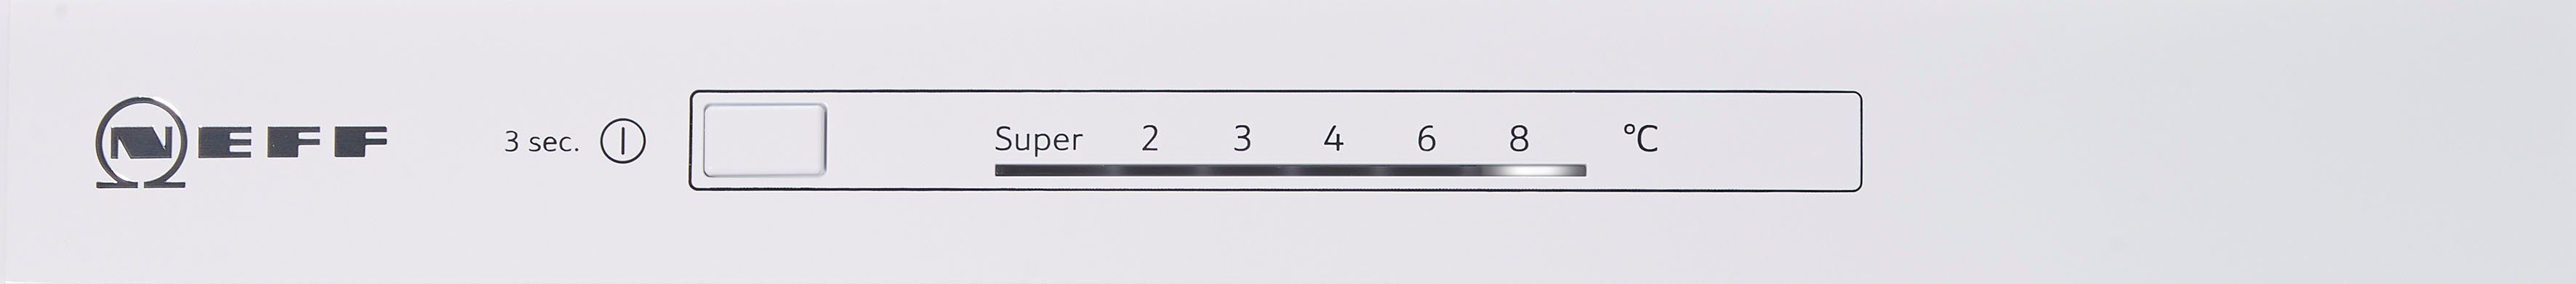 NEFF Einbaukühlgefrierkombination KI5862FE0, hoch, breit 54,1 cm 177,2 cm